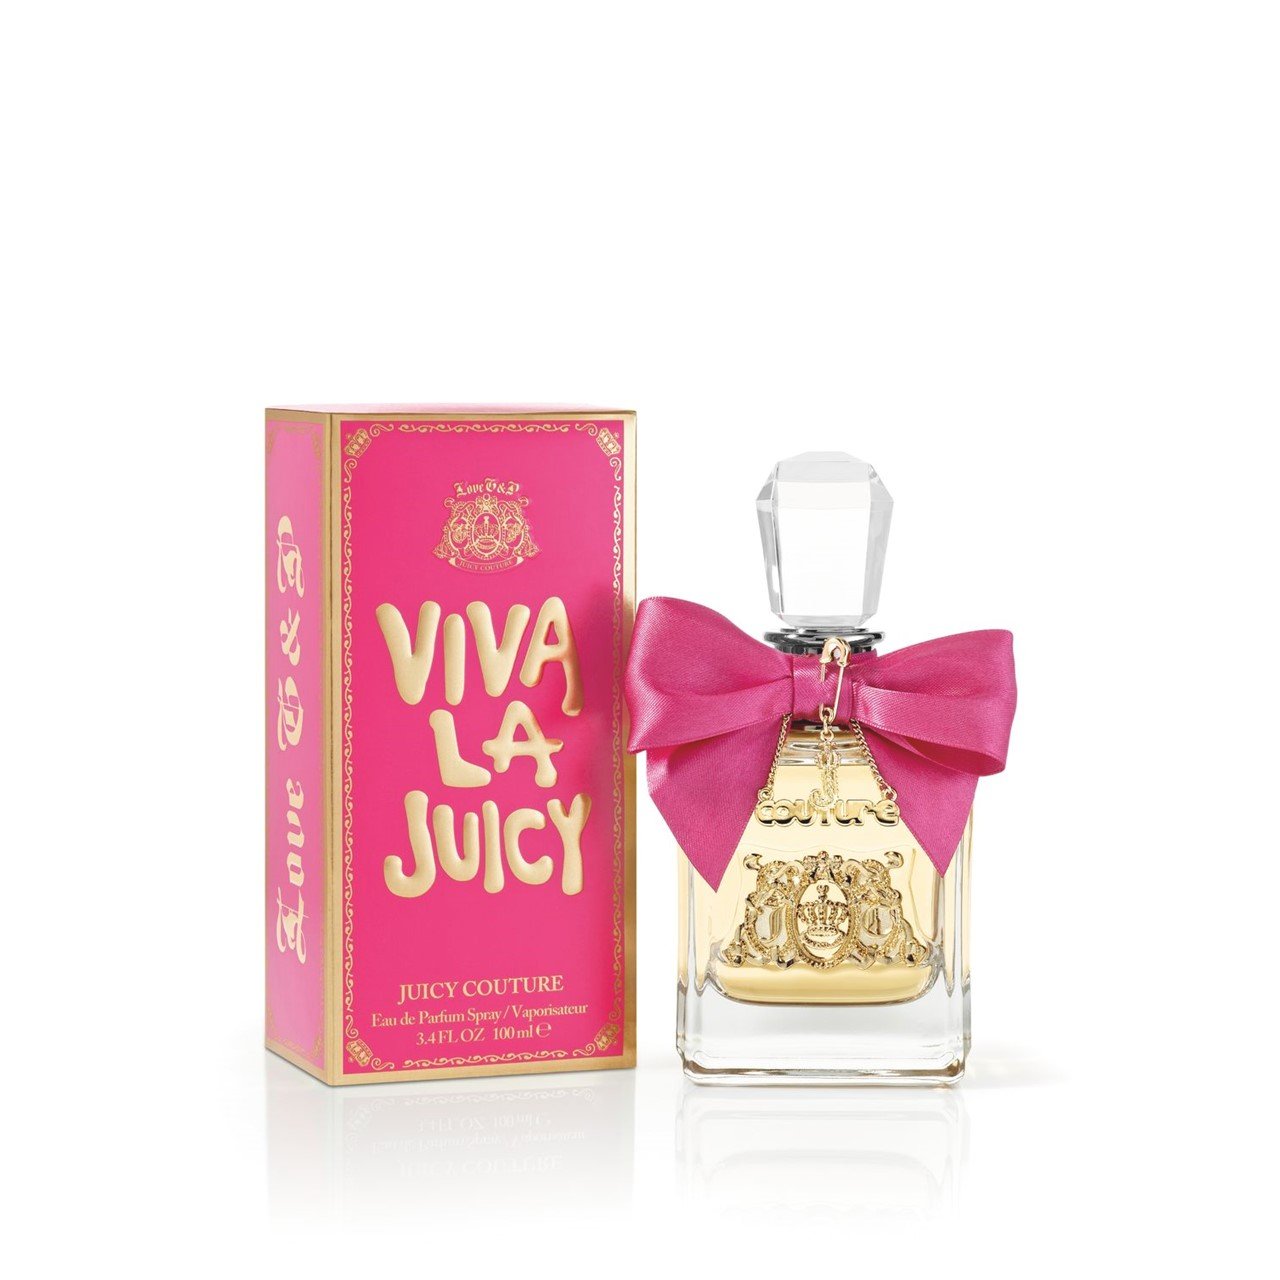 Juicy Couture Viva La Juicy Eau de Parfum 100ml (3.4fl oz)